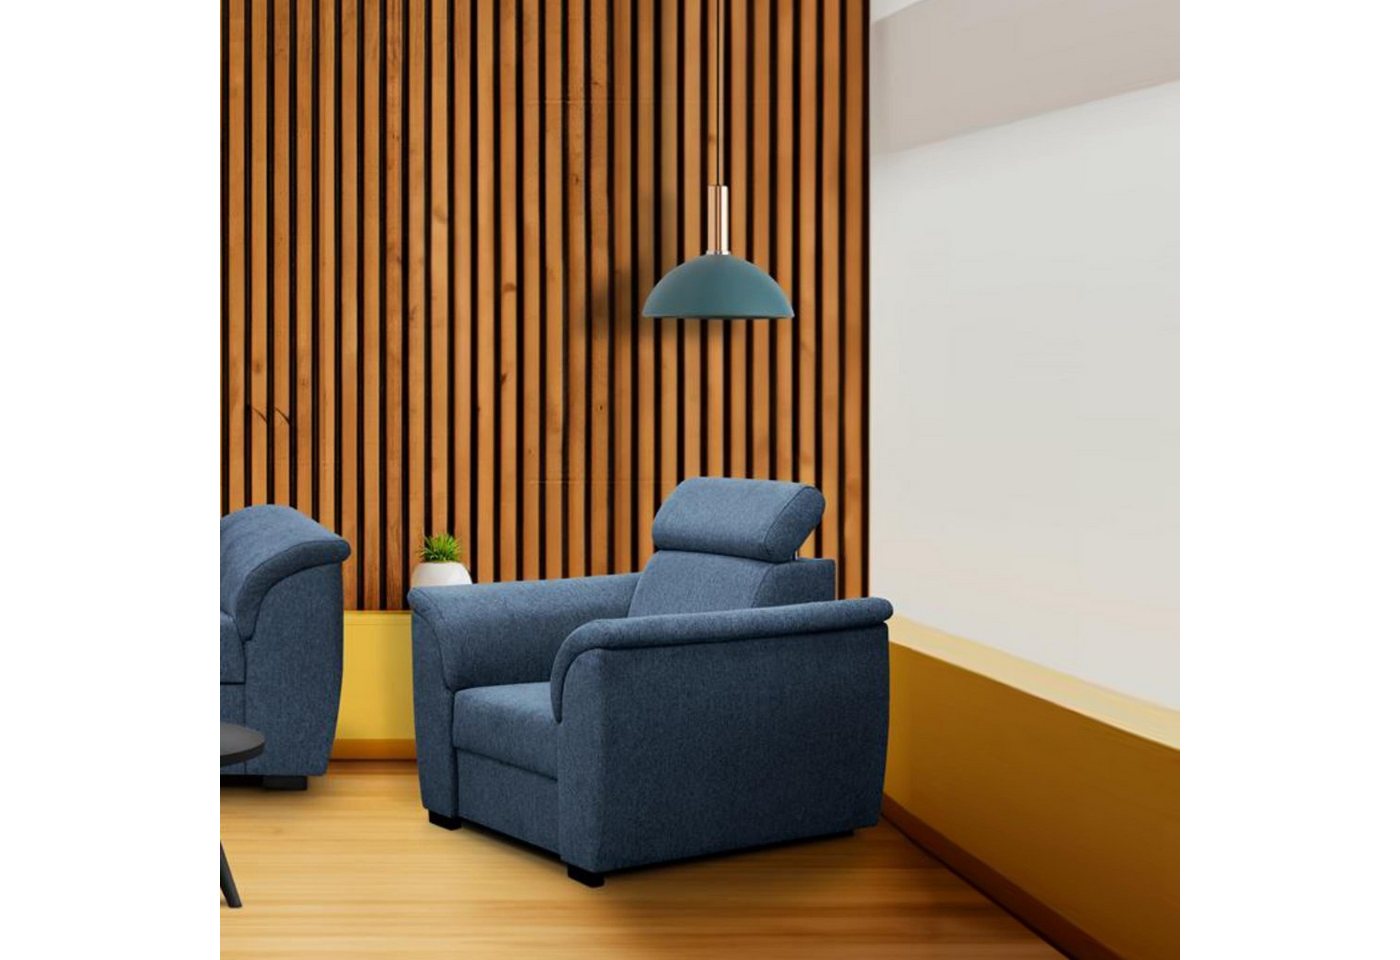 Beautysofa Relaxsessel Madera (modern Lounge Polstersessel mit Wellenfedern), stilvoll Sessel mit verstellbare Kopfstütze von Beautysofa